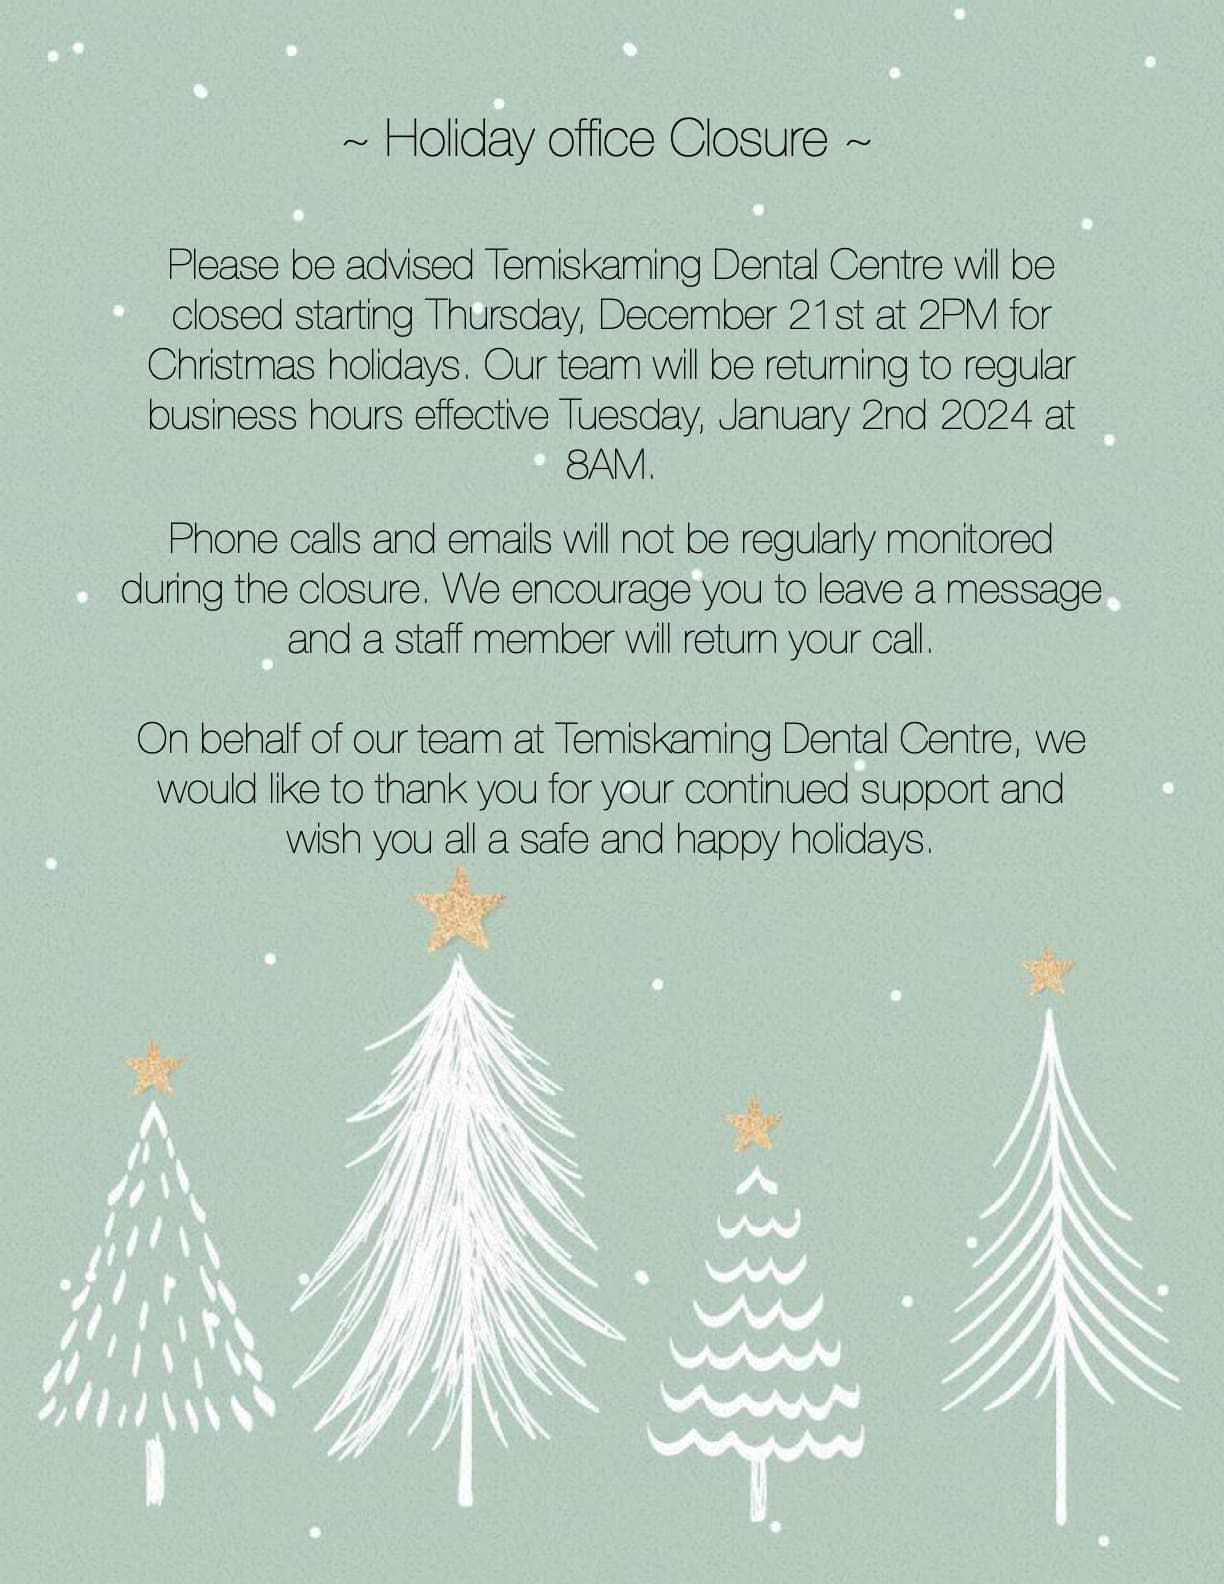 Temiskaming Dental Centre 100 Whitewood Ave W, Temiskaming Shores Ontario P0J 1P0